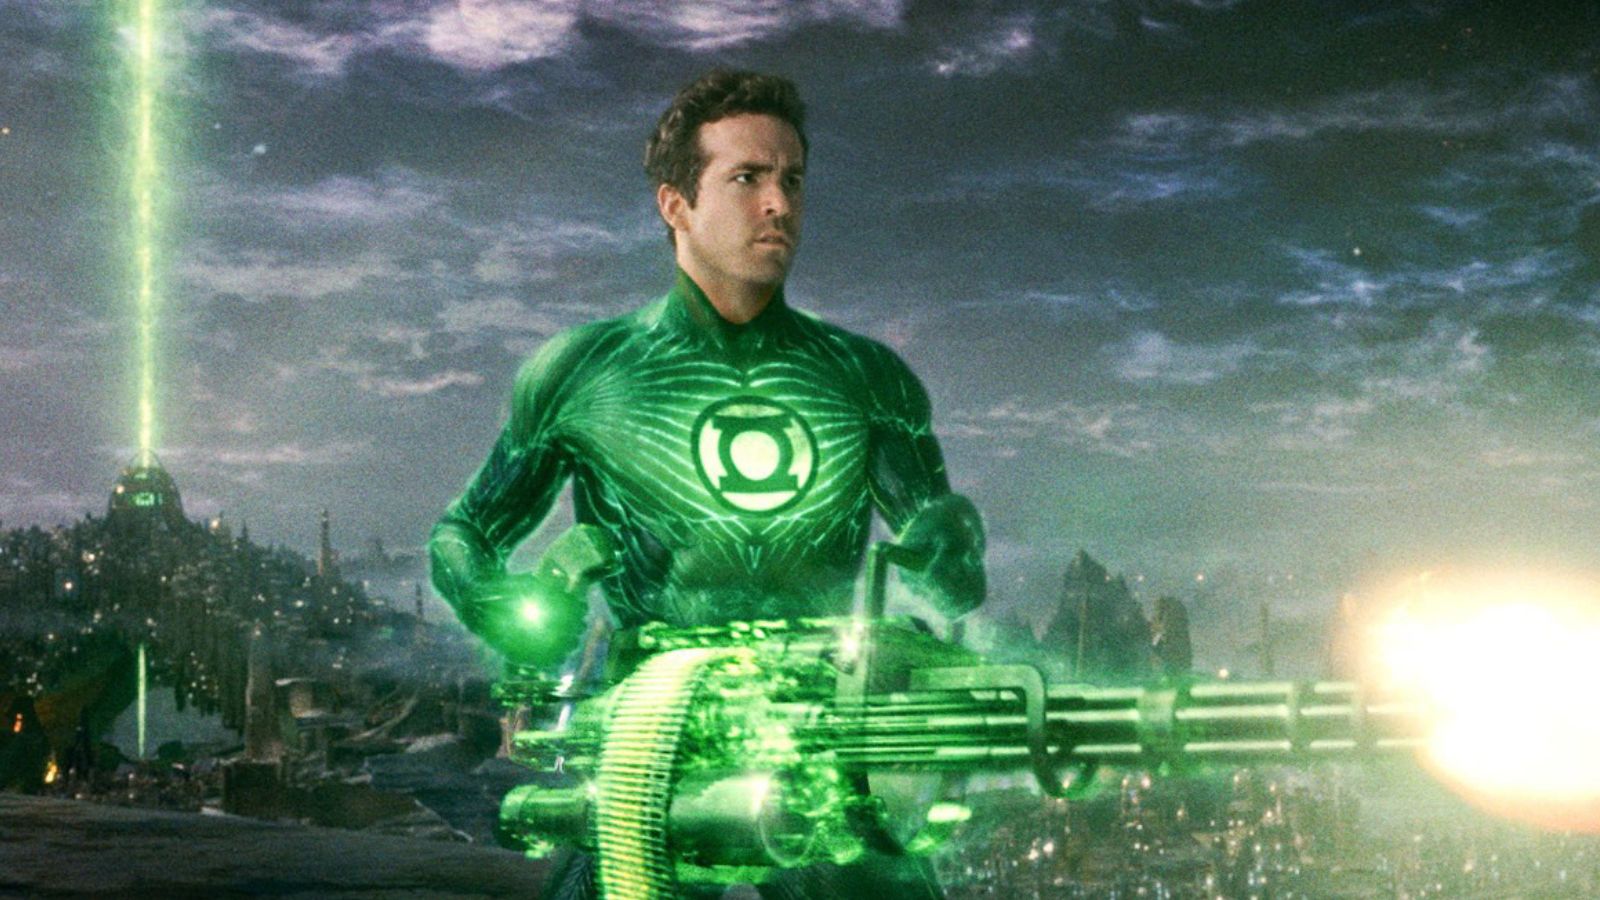 Green Lantern a second chance for Ryan Reynolds